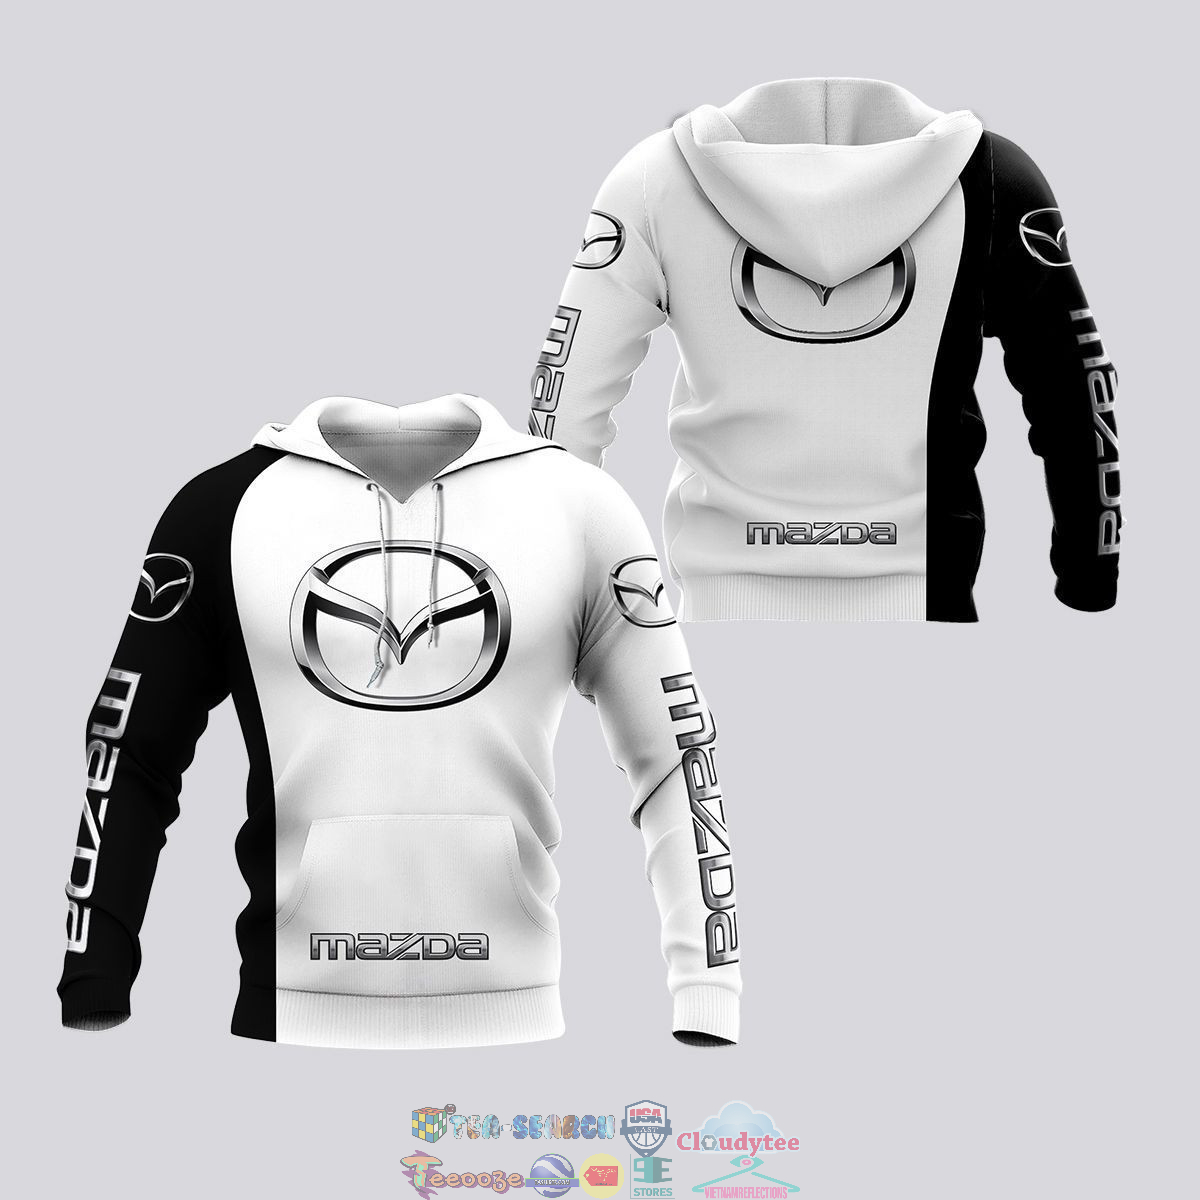 sRX0IlcU-TH130822-09xxxMazda-ver-13-3D-hoodie-and-t-shirt3.jpg